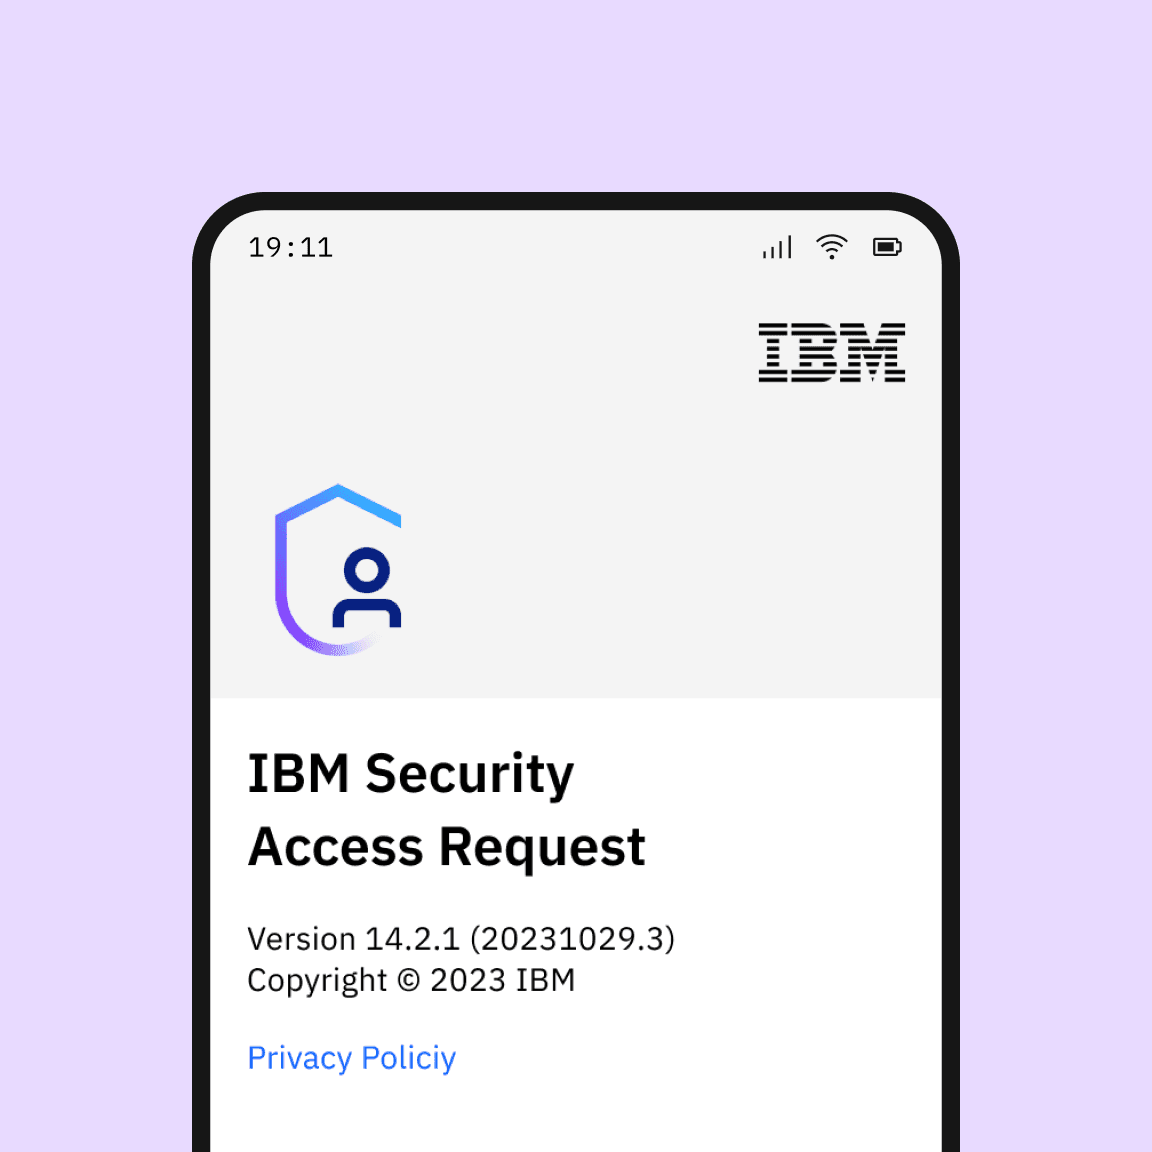 IBM Security mobile app for identity verification